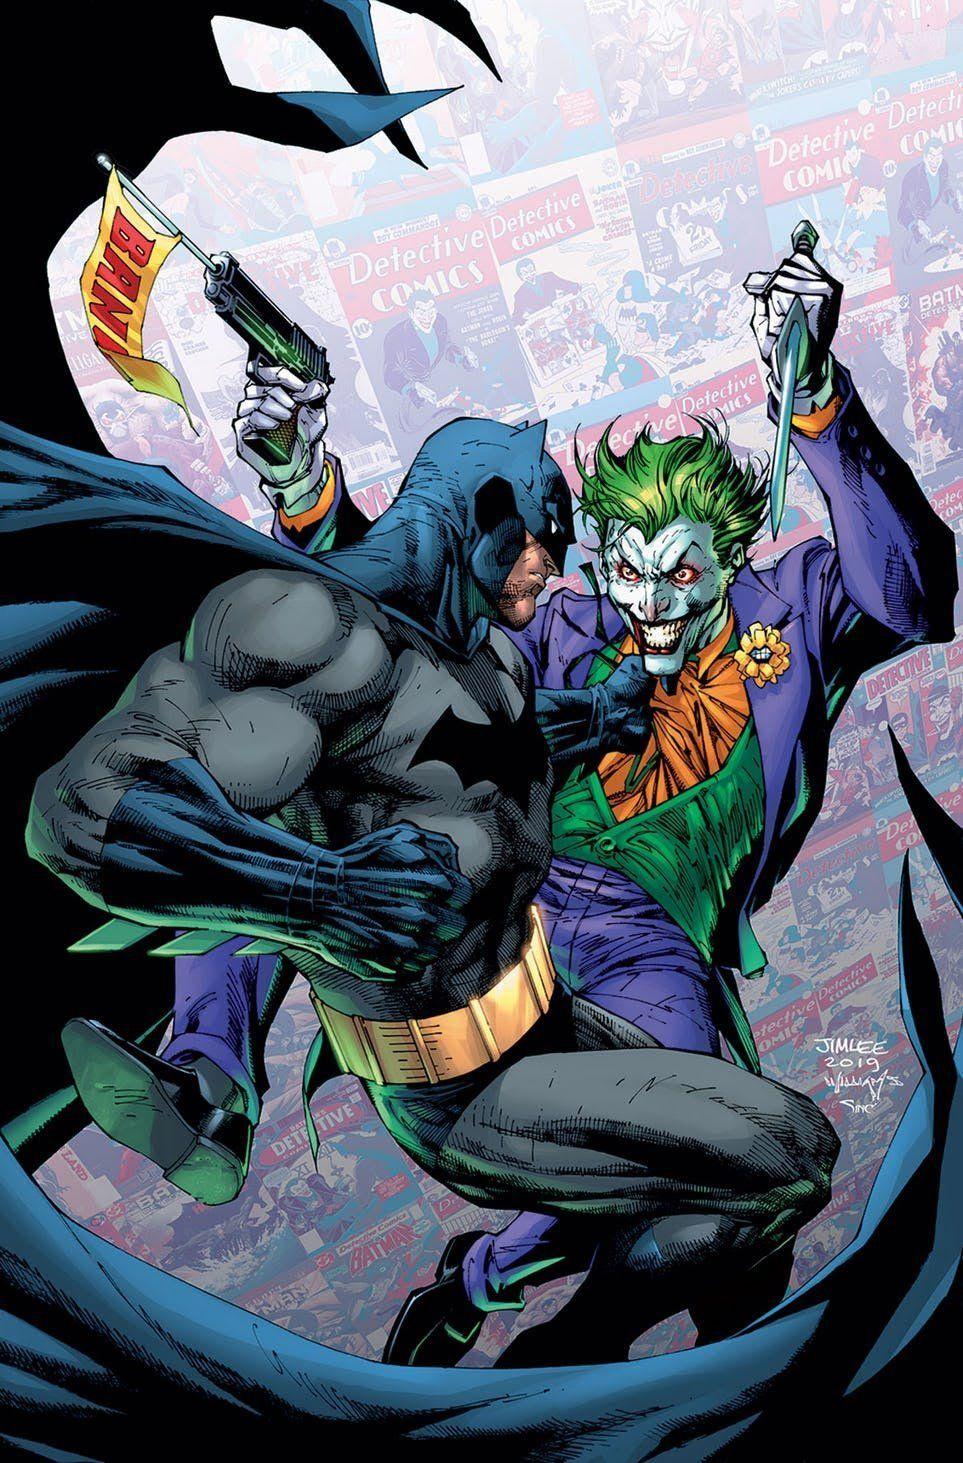 Batman vs Joker Lee cover art for Detective Comics